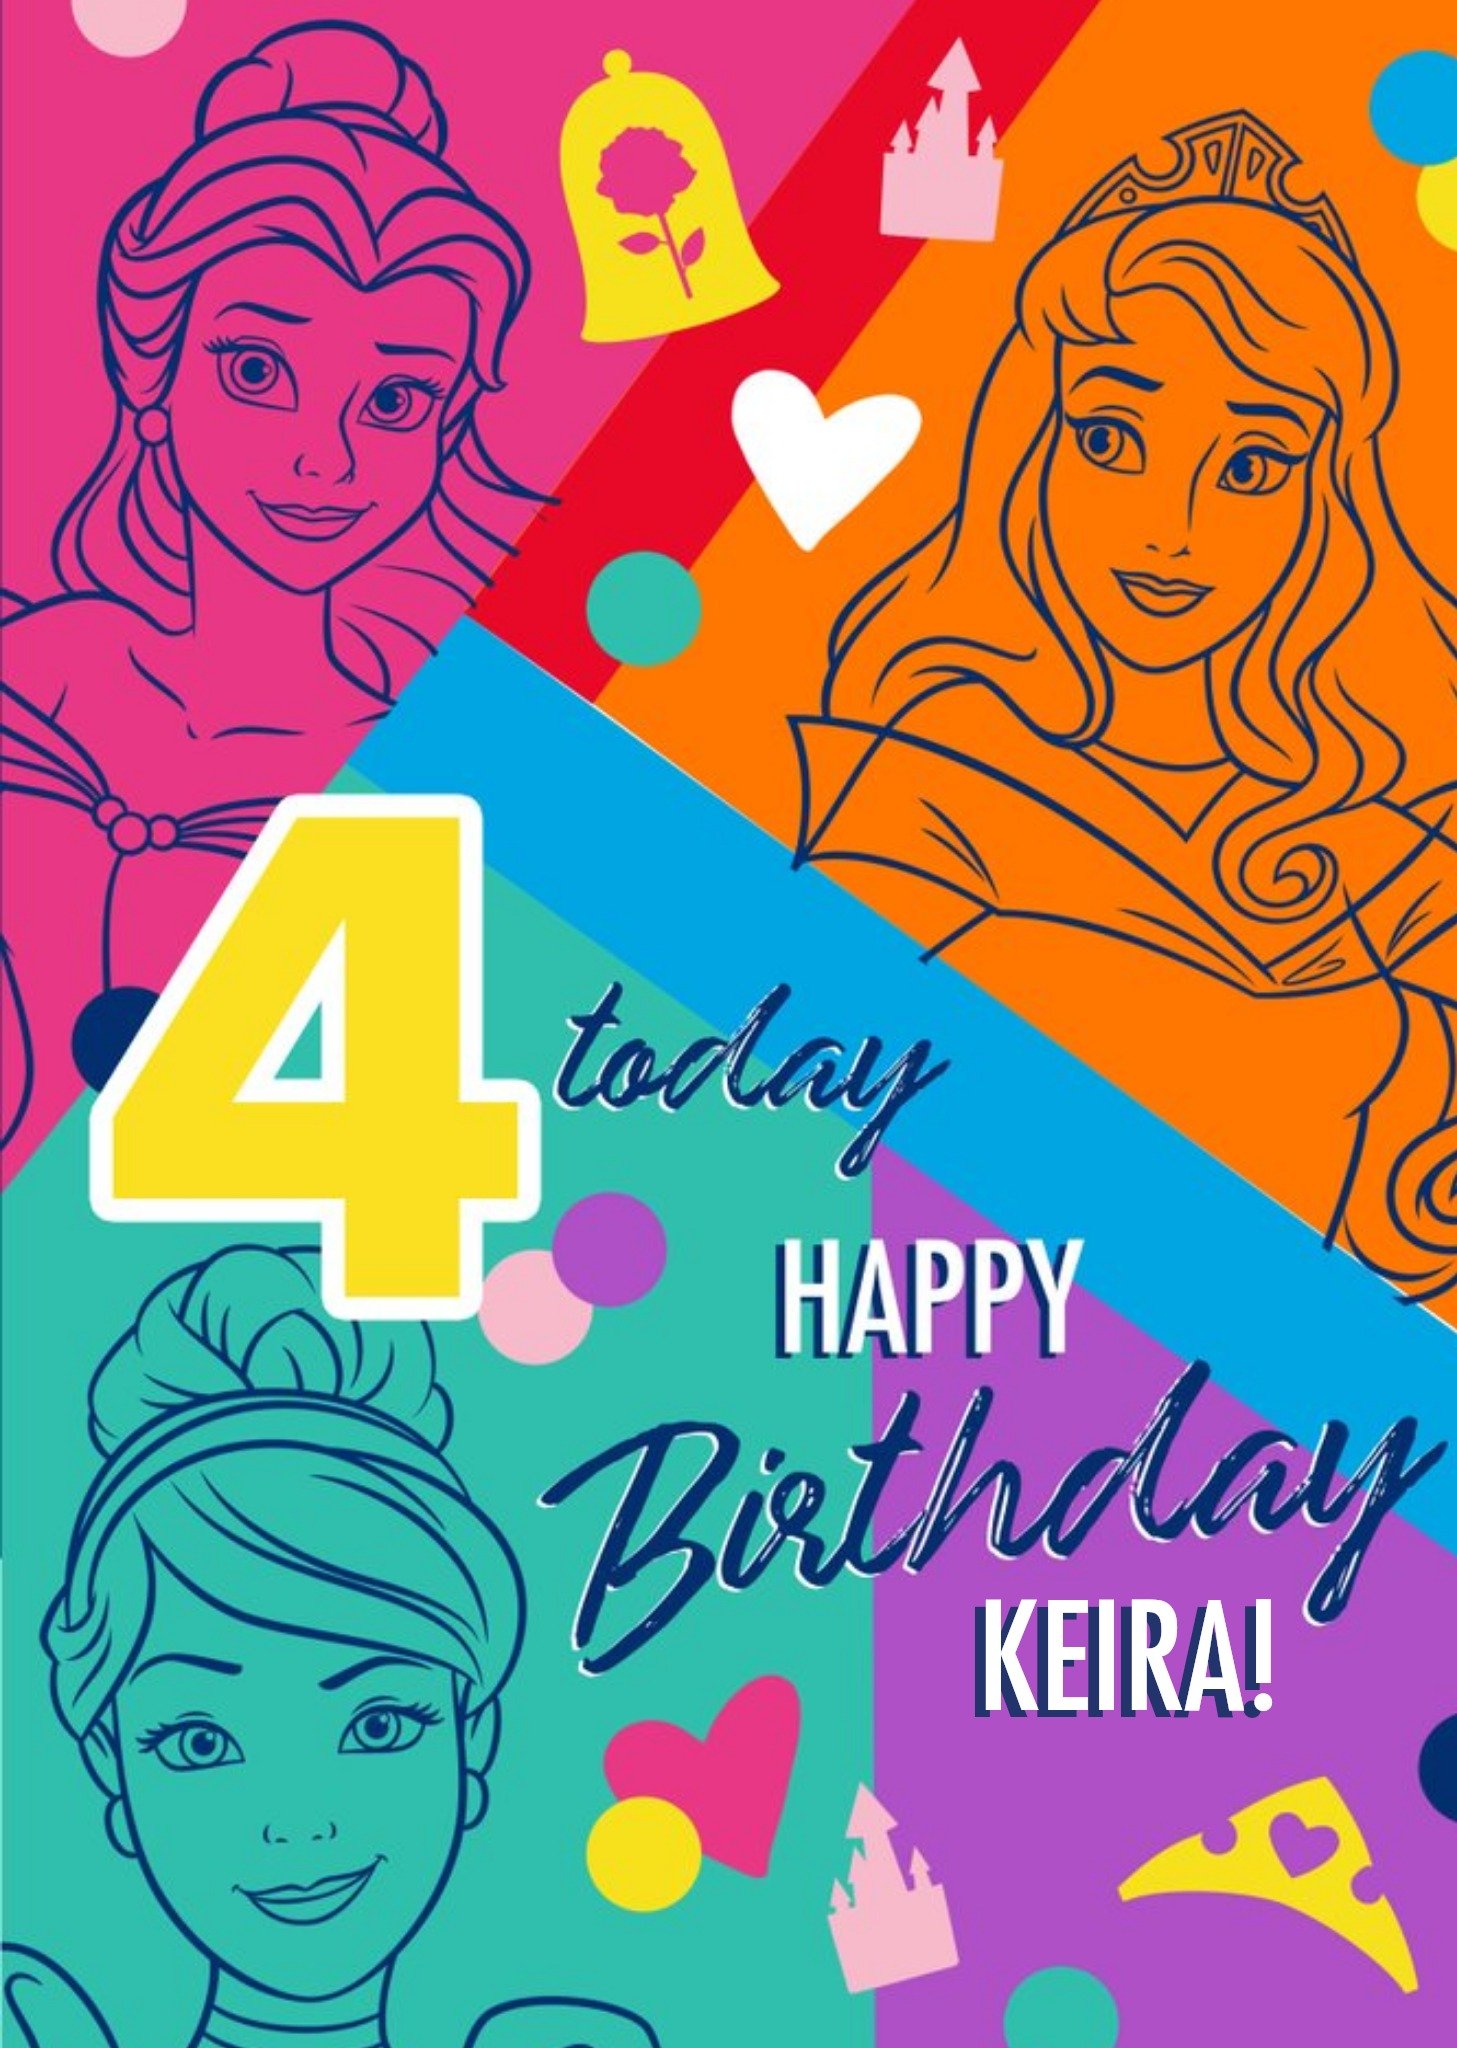 Disney Princesses 4 Today Happy Birthday Ecard